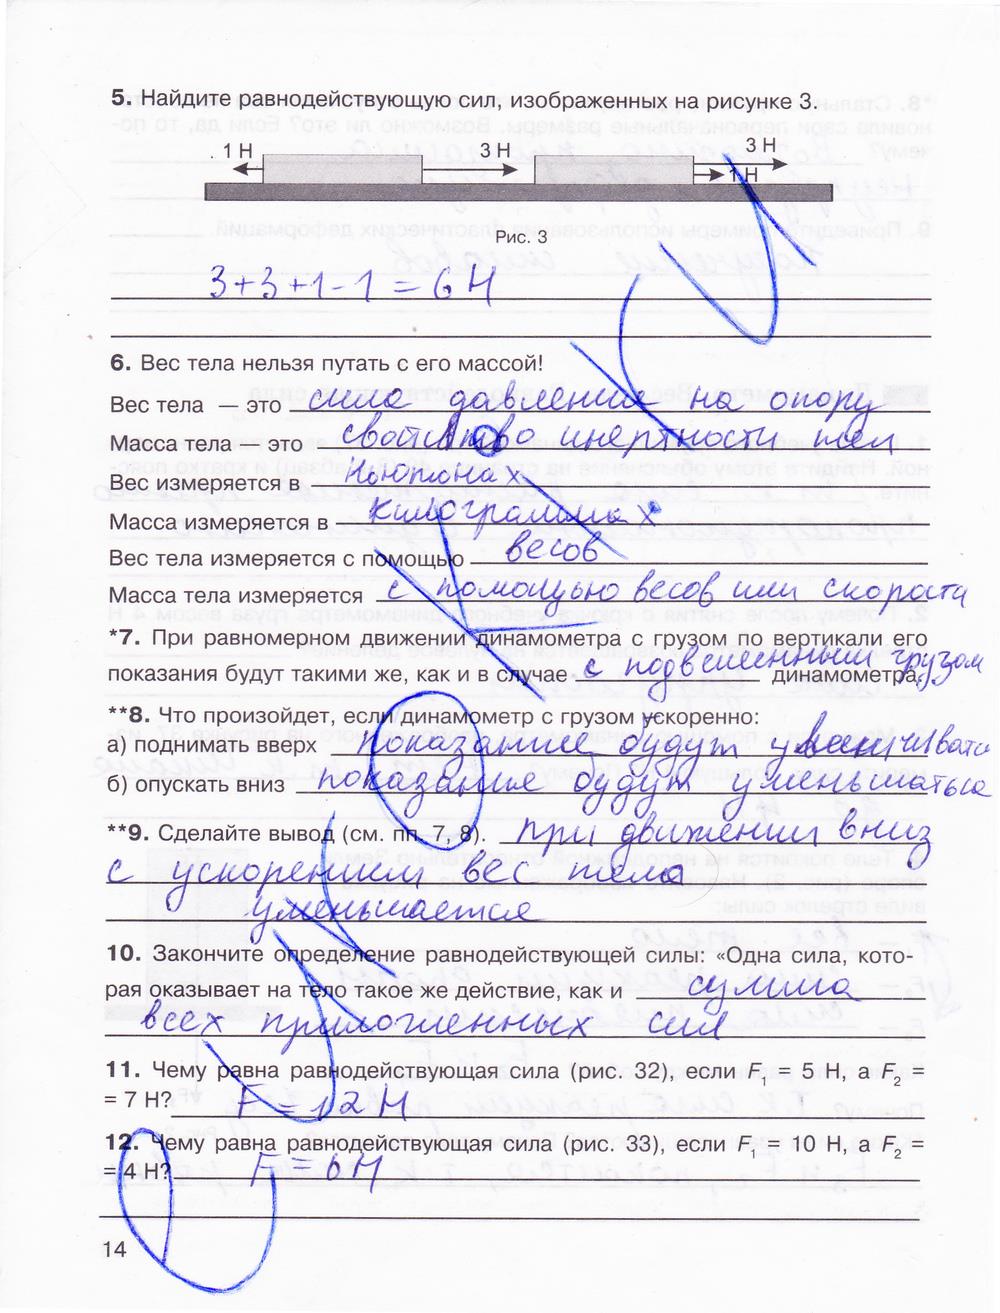 гдз 7 класс рабочая тетрадь страница 14 физика Мартынова, Бовин, Коротаев